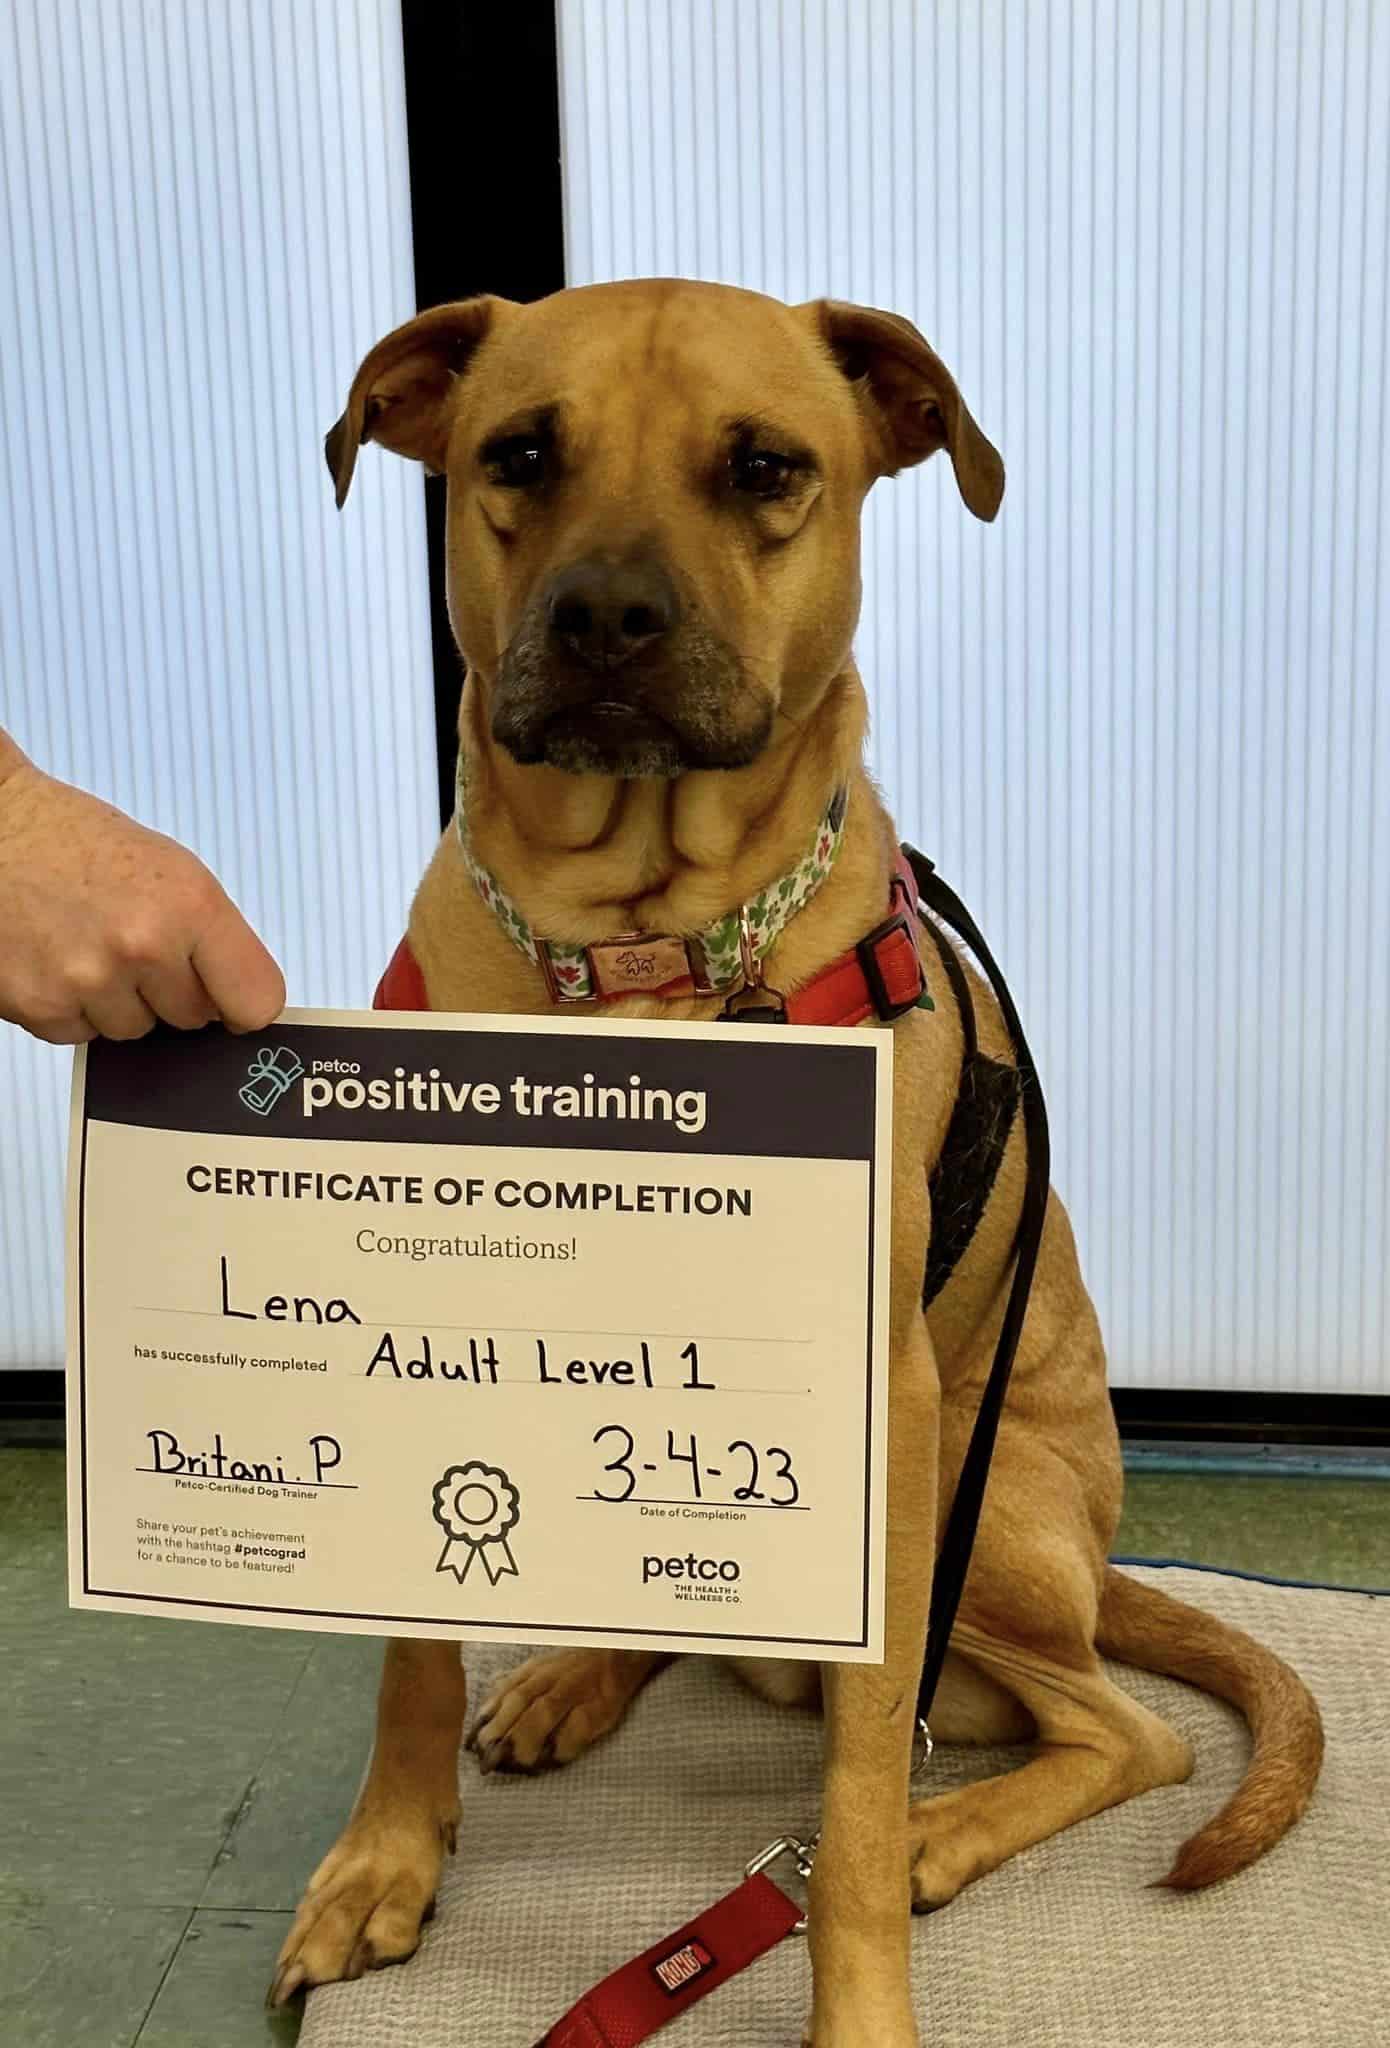 lena graduating a dog training class